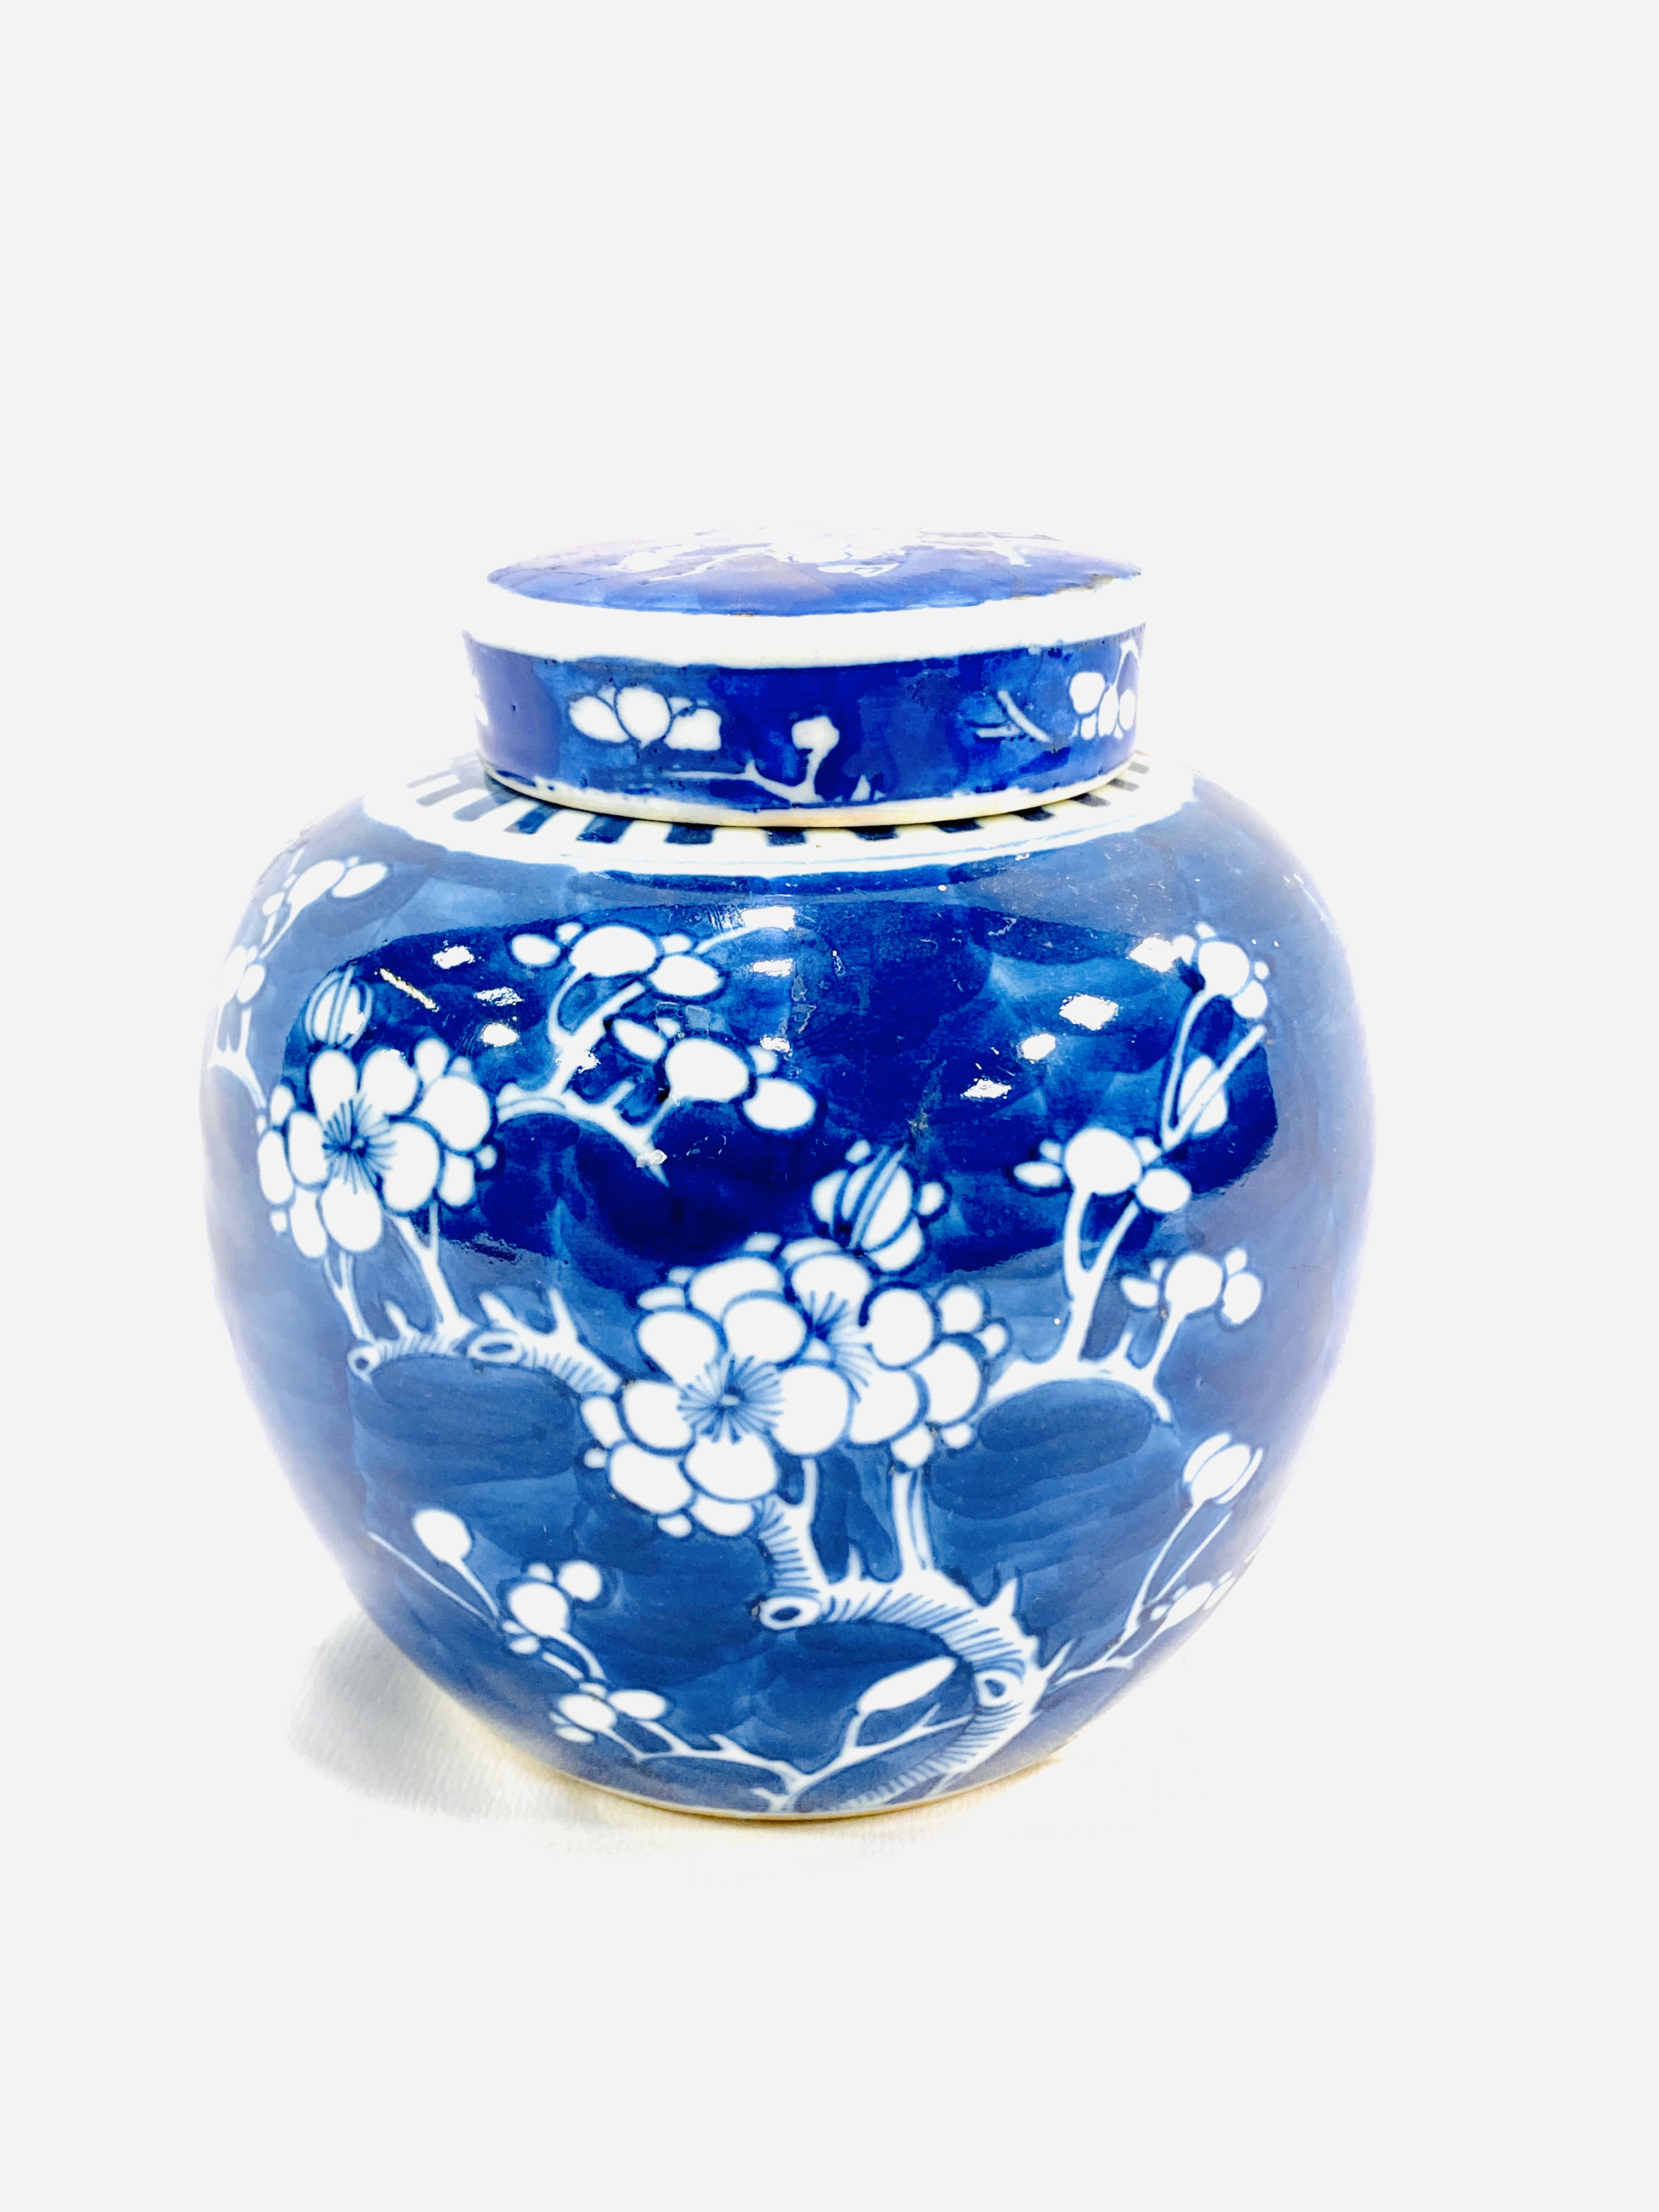 Oriental bowl and ginger jar - Image 6 of 17